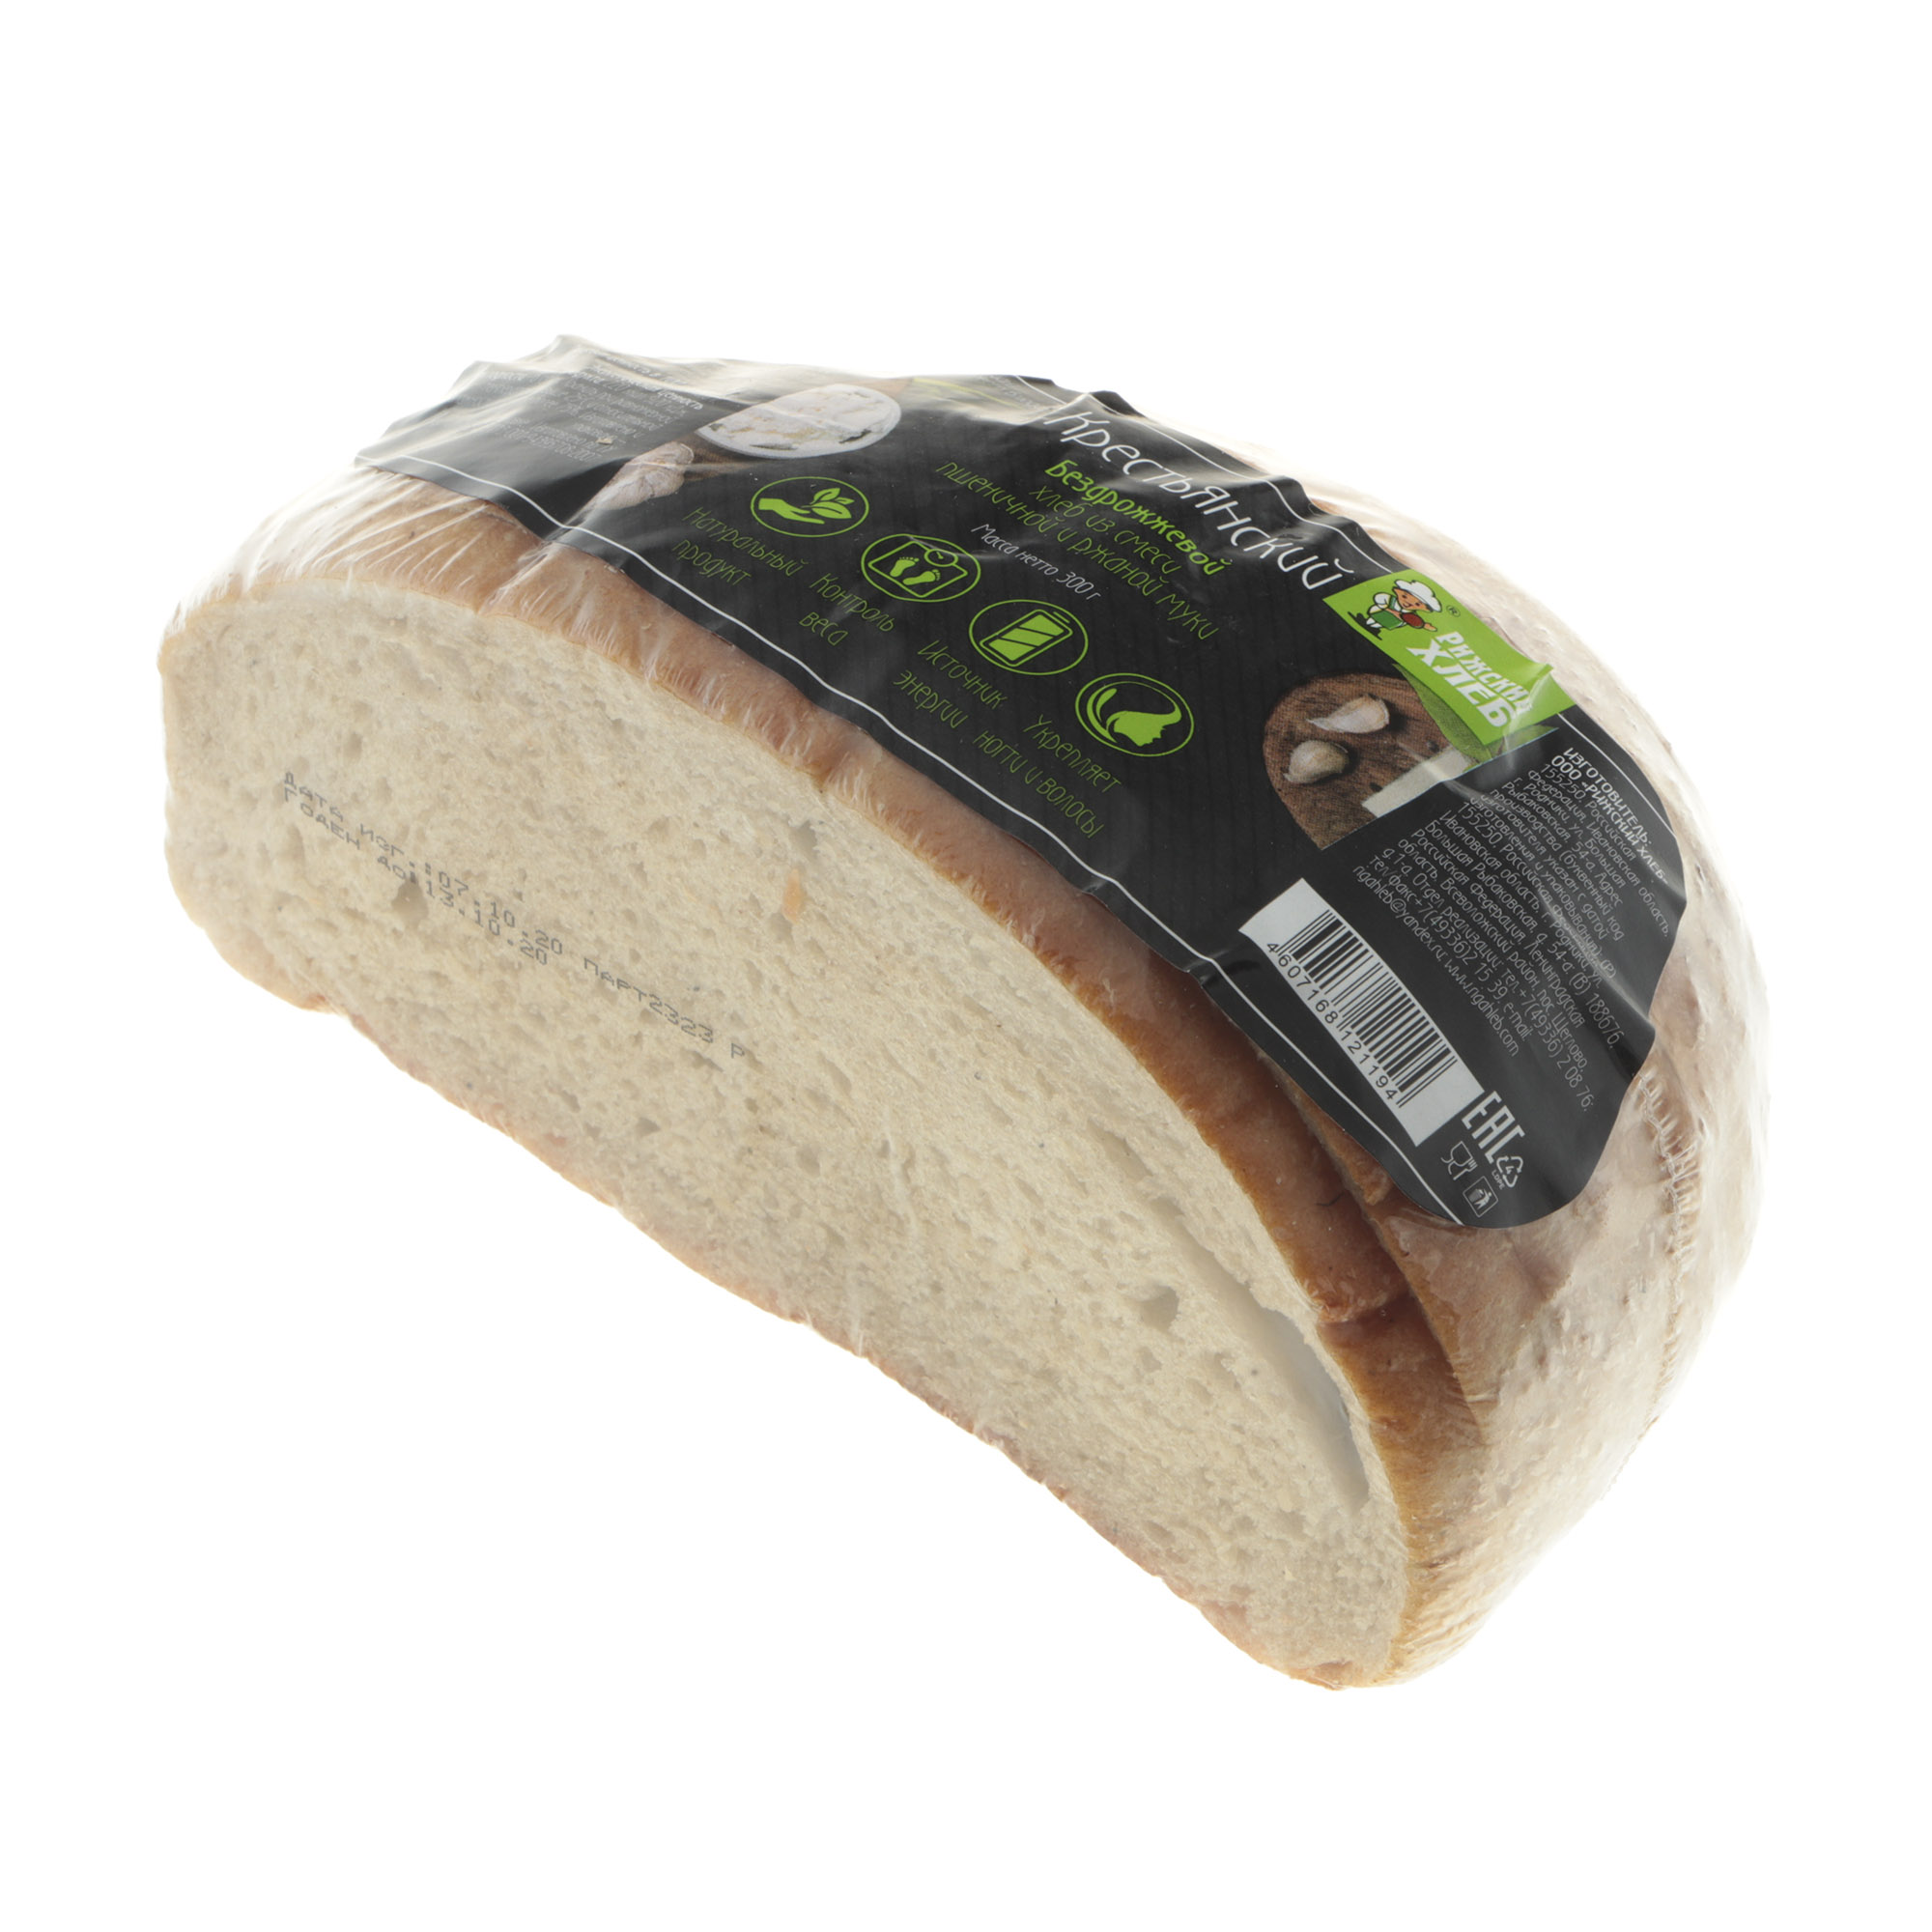 Хлеб Рижский хлеб крестьянский 300 г хлеб рижский хлеб ароматный 300 г